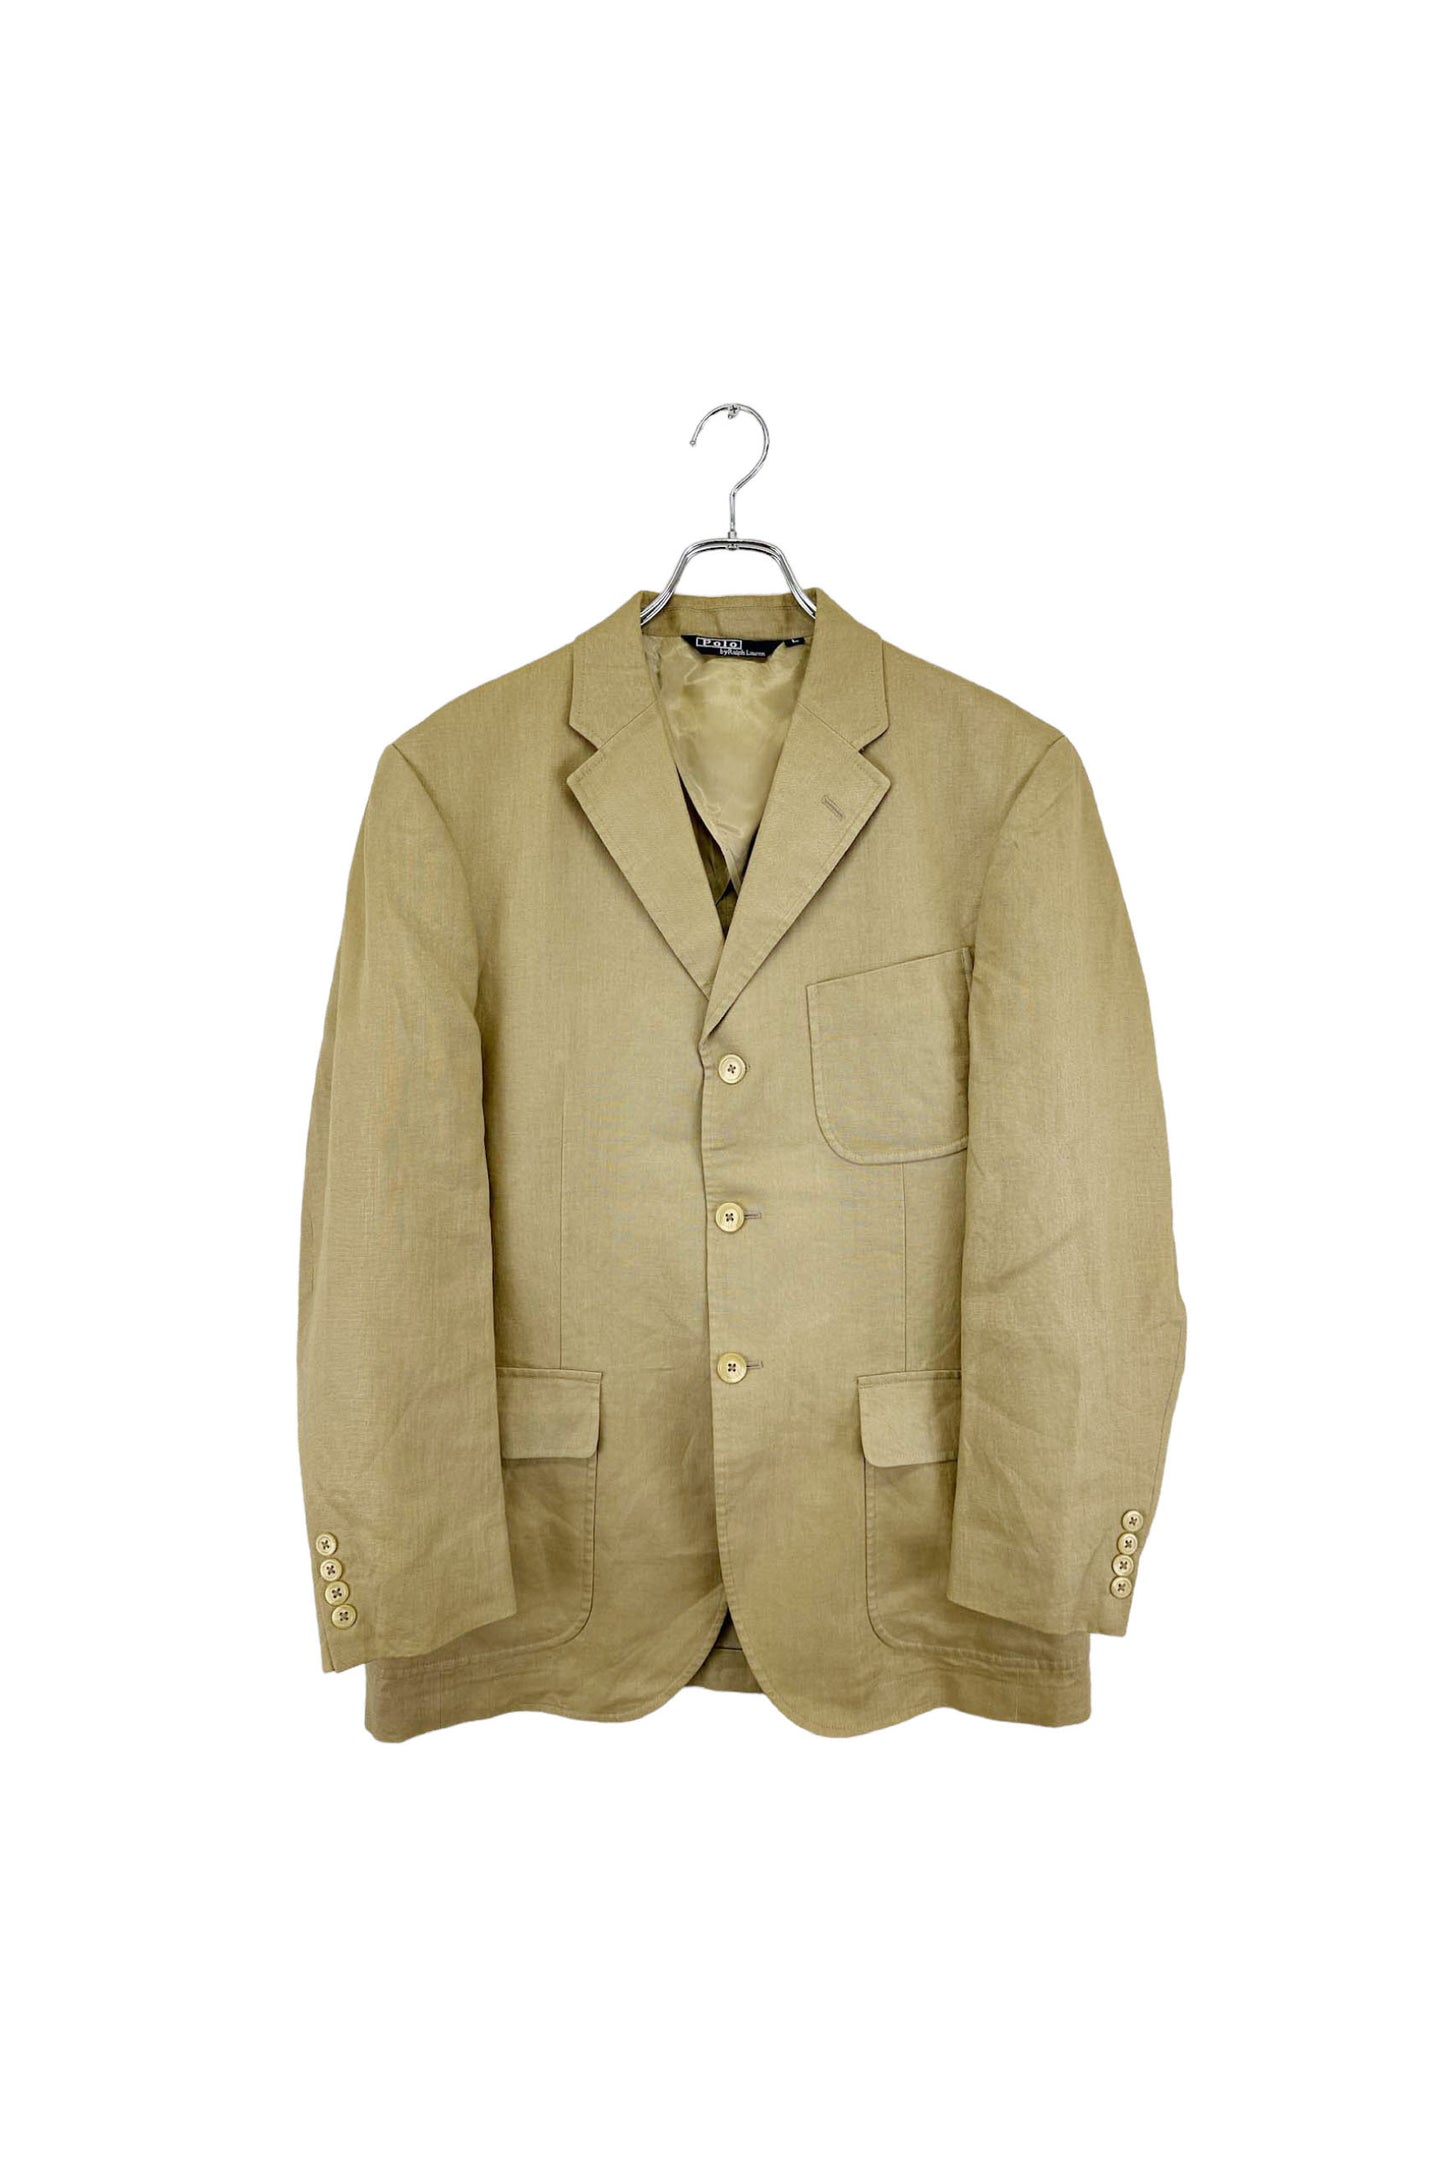 90‘s Polo by Ralph Lauren linen jacket